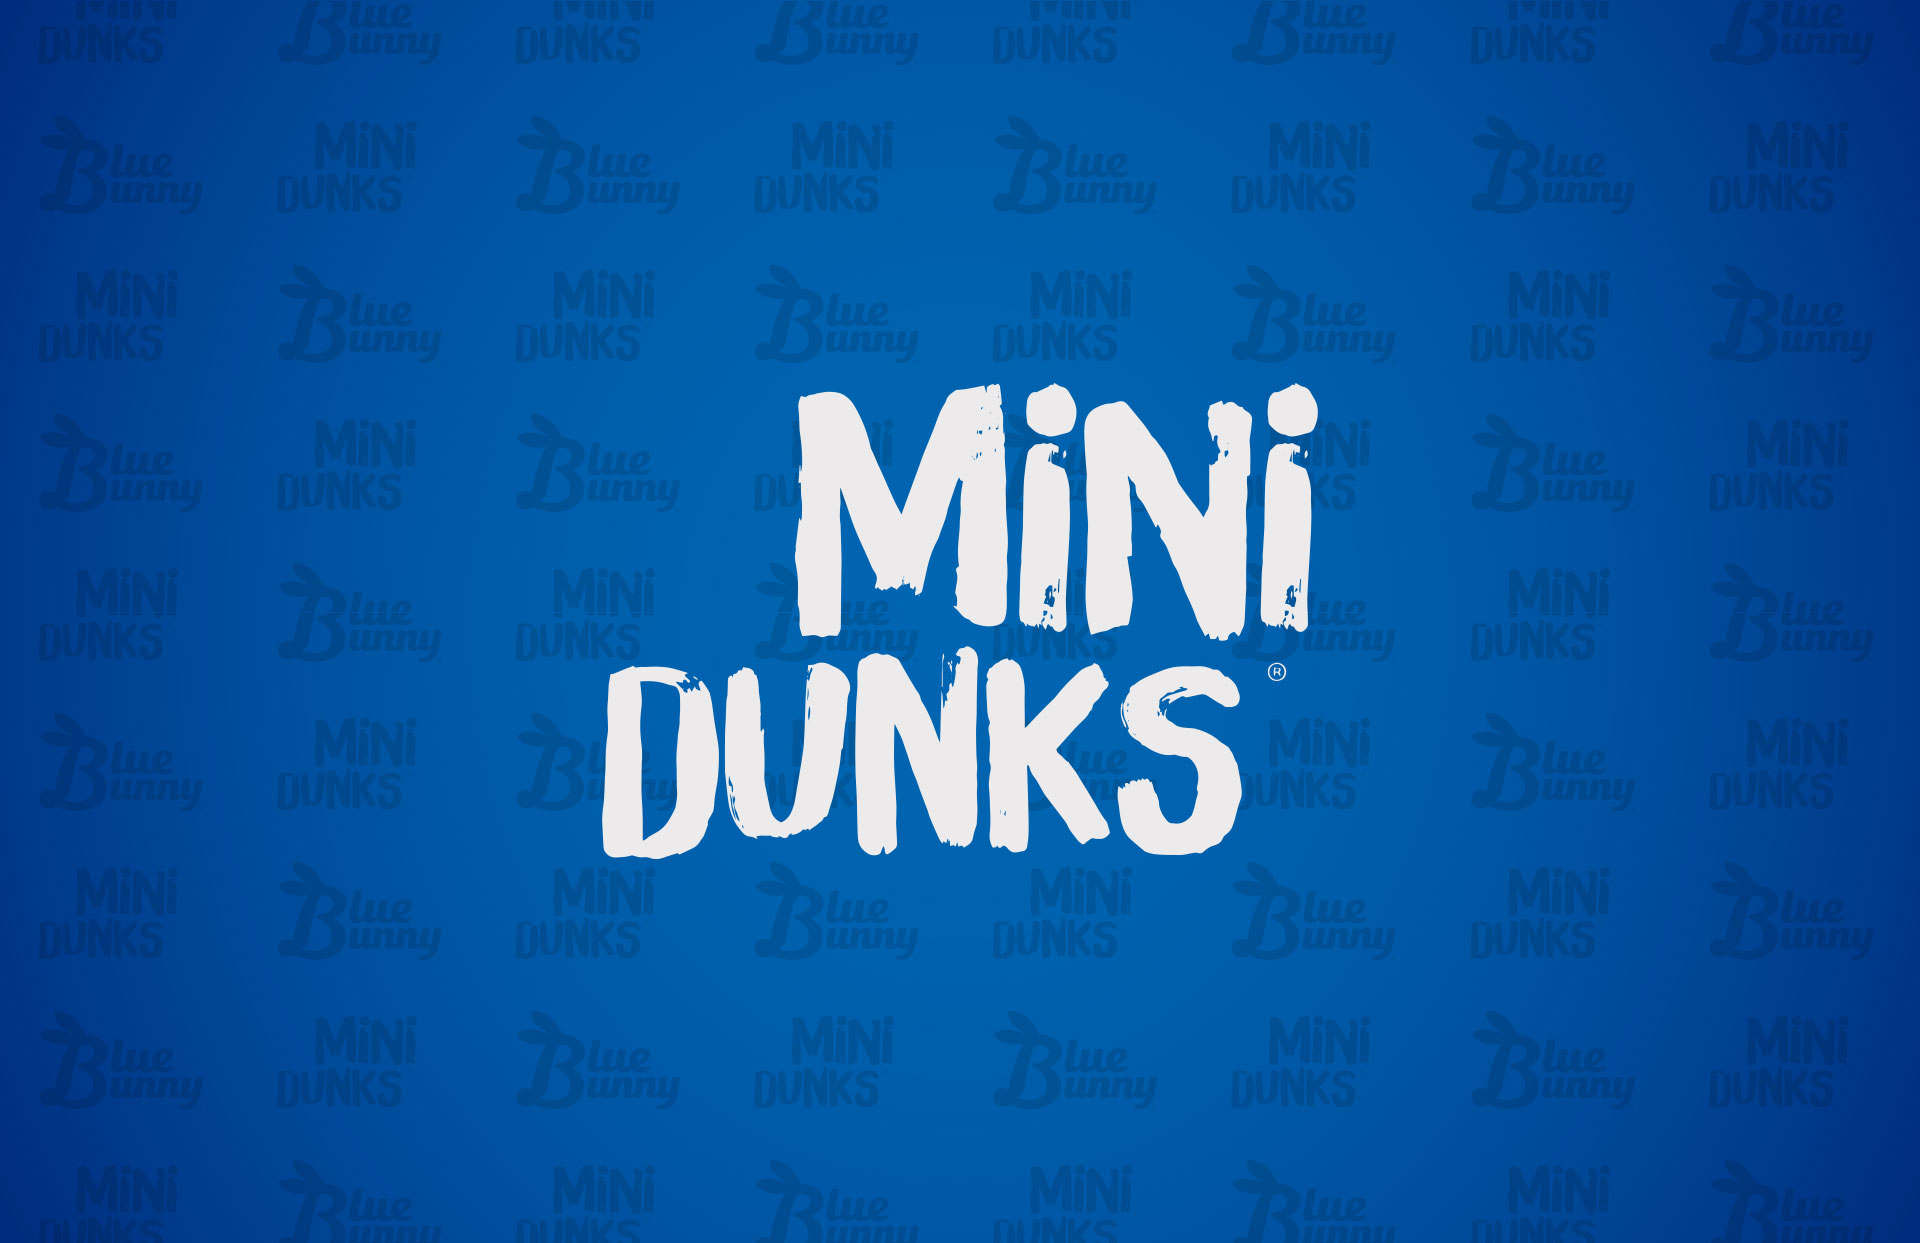 Mini Dunks logo from Blue Bunny ice cream.